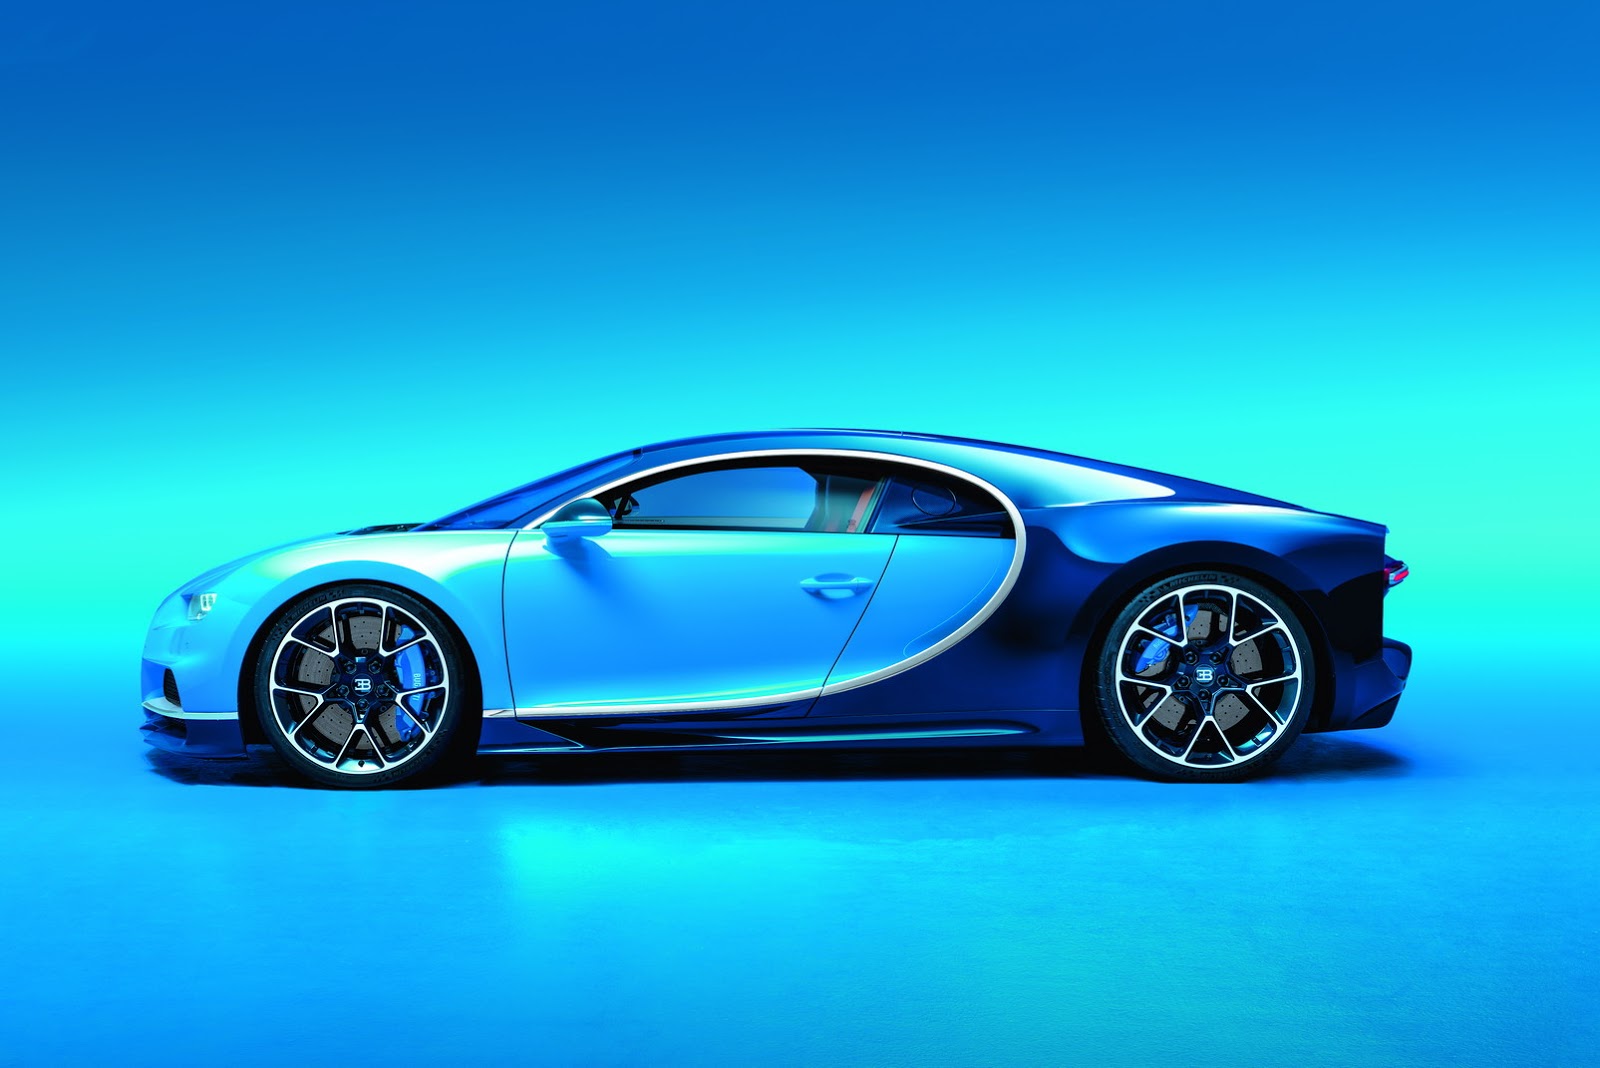 The 1500 Hp Bugatti Chiron Revealed At The 2016 Geneva Motor Show Pakwheels Blog 4549